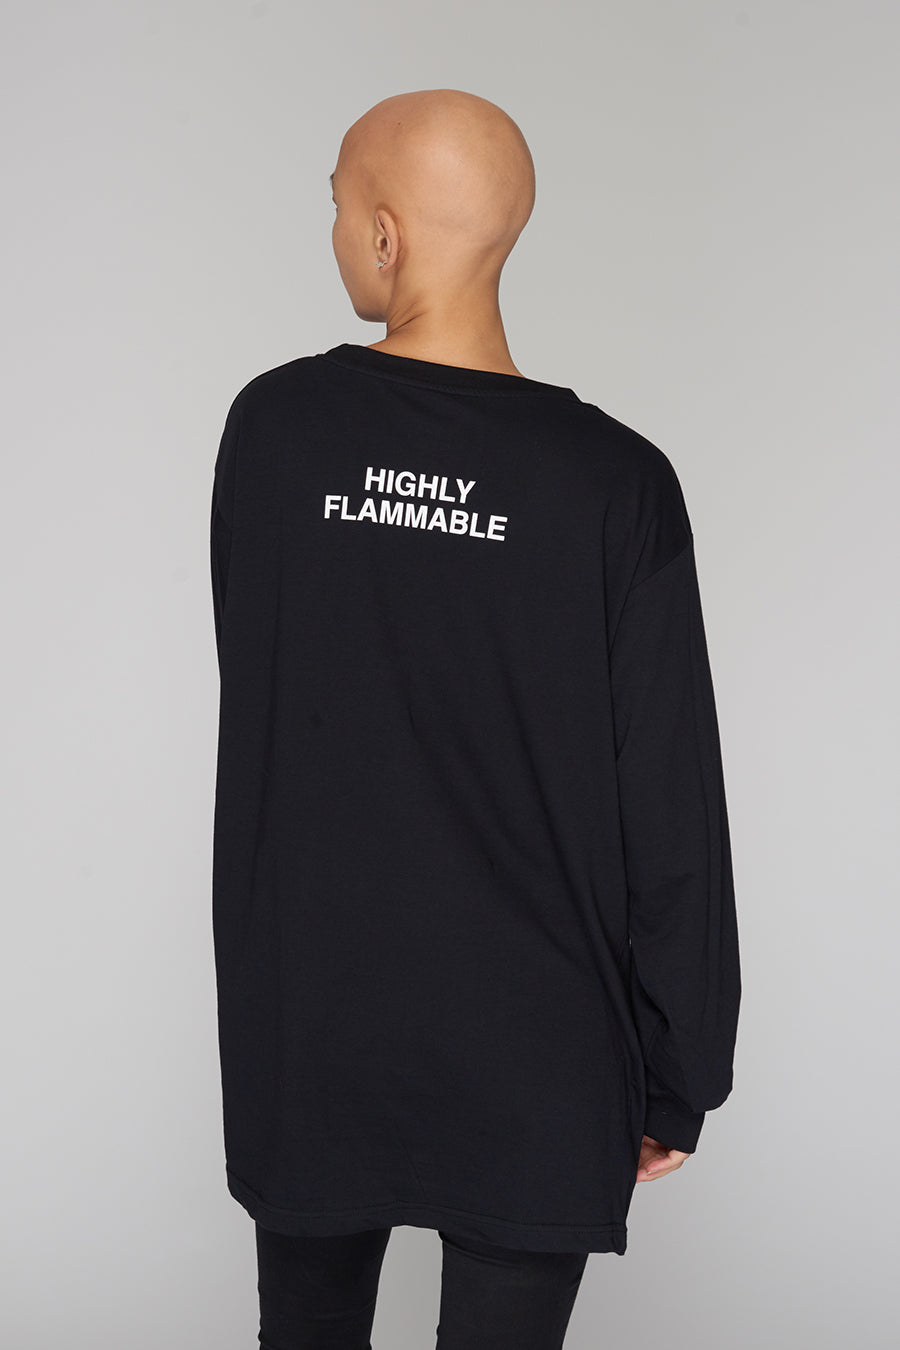 Highly Flammable Long Sleeve (B)